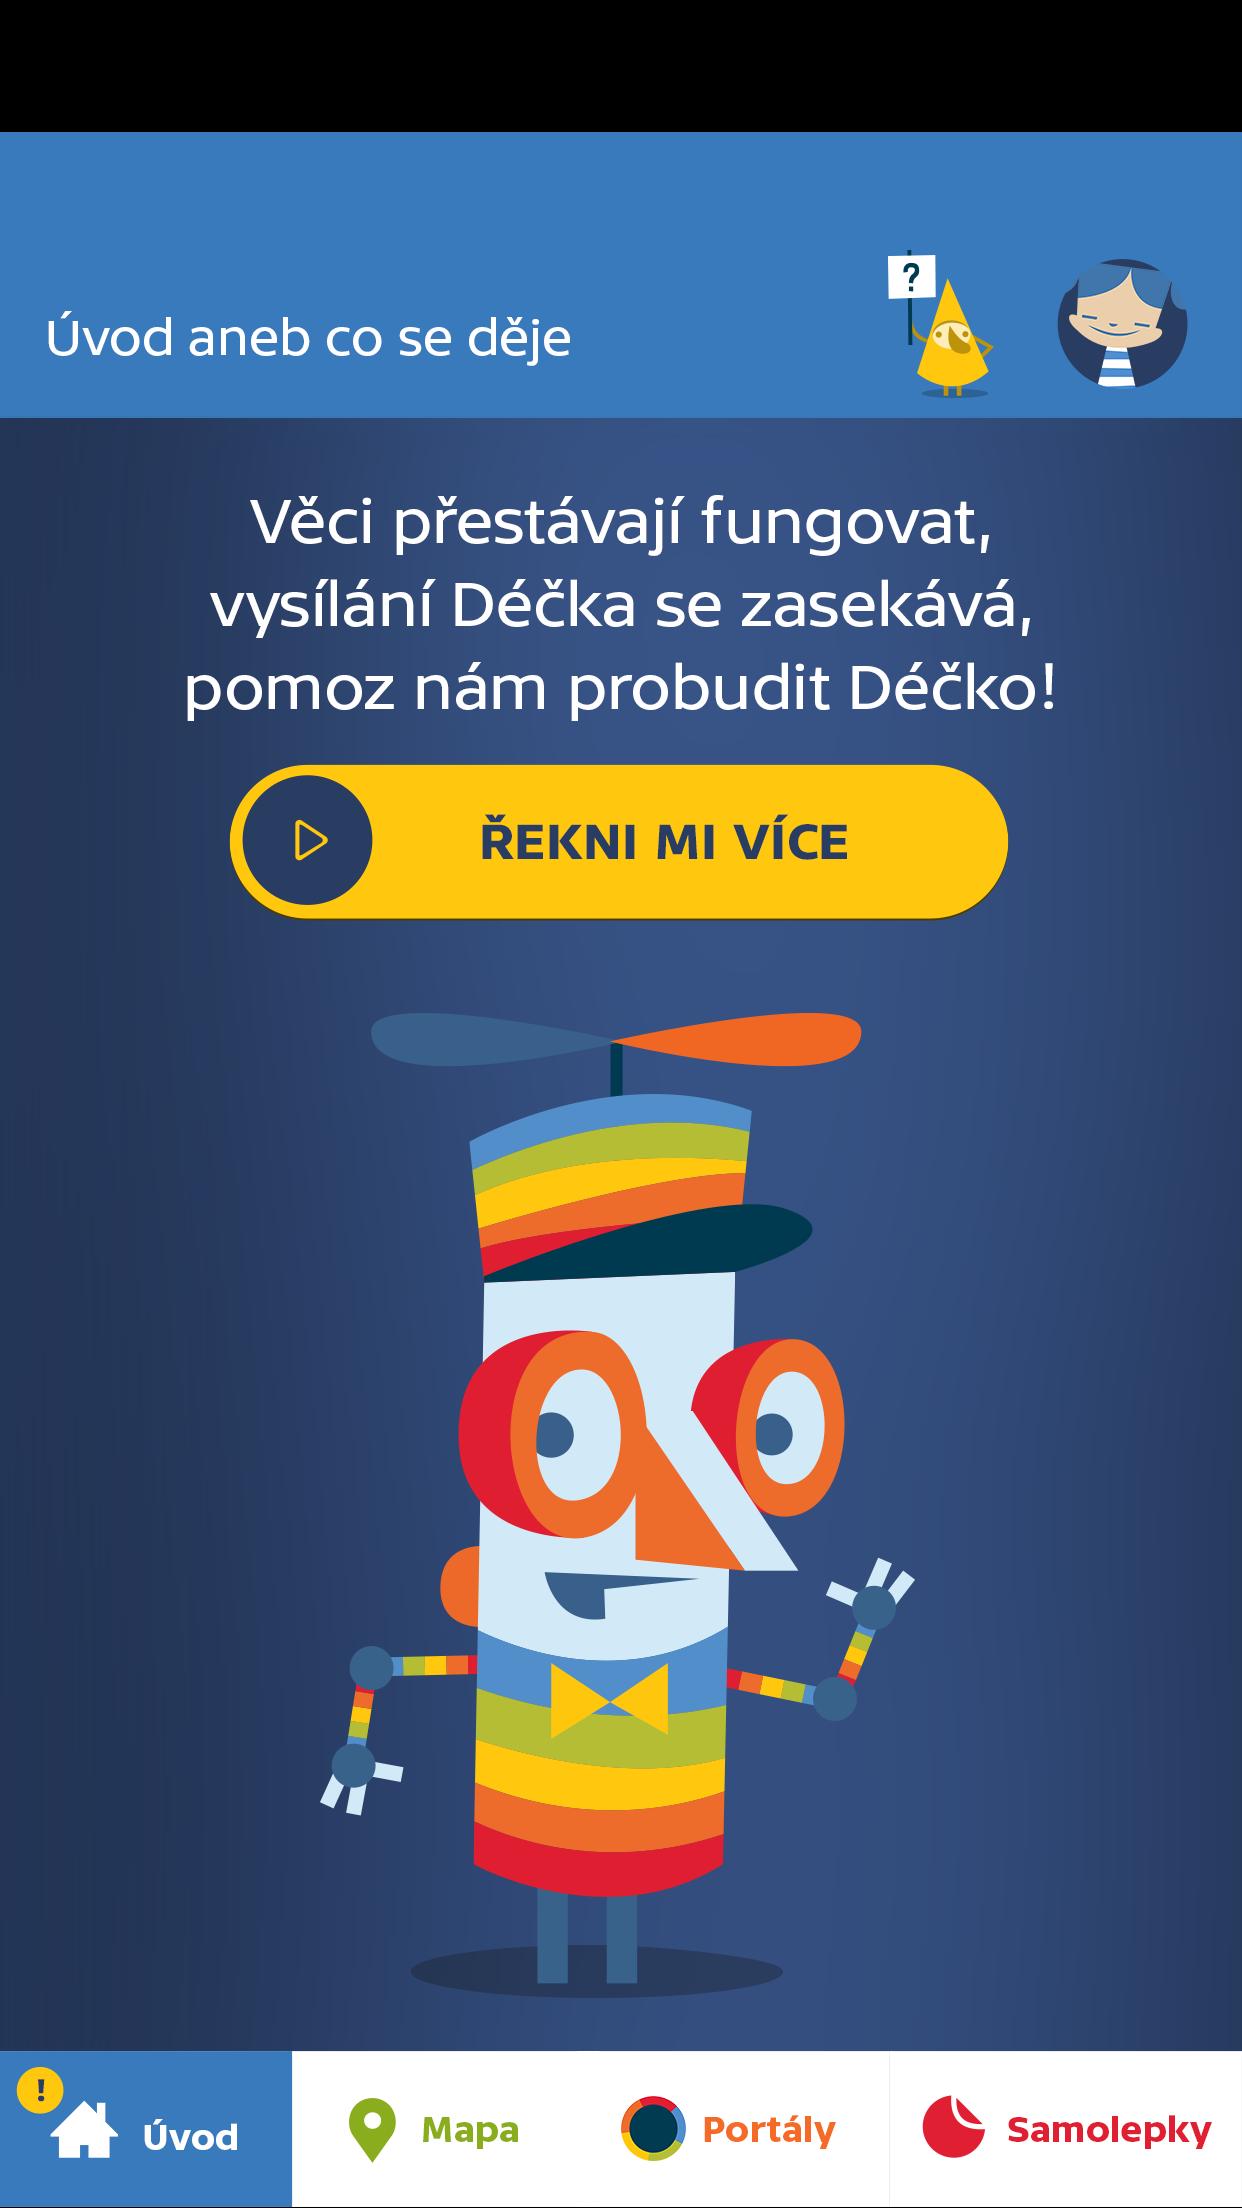 Probuď Déčko! for Android - APK Download